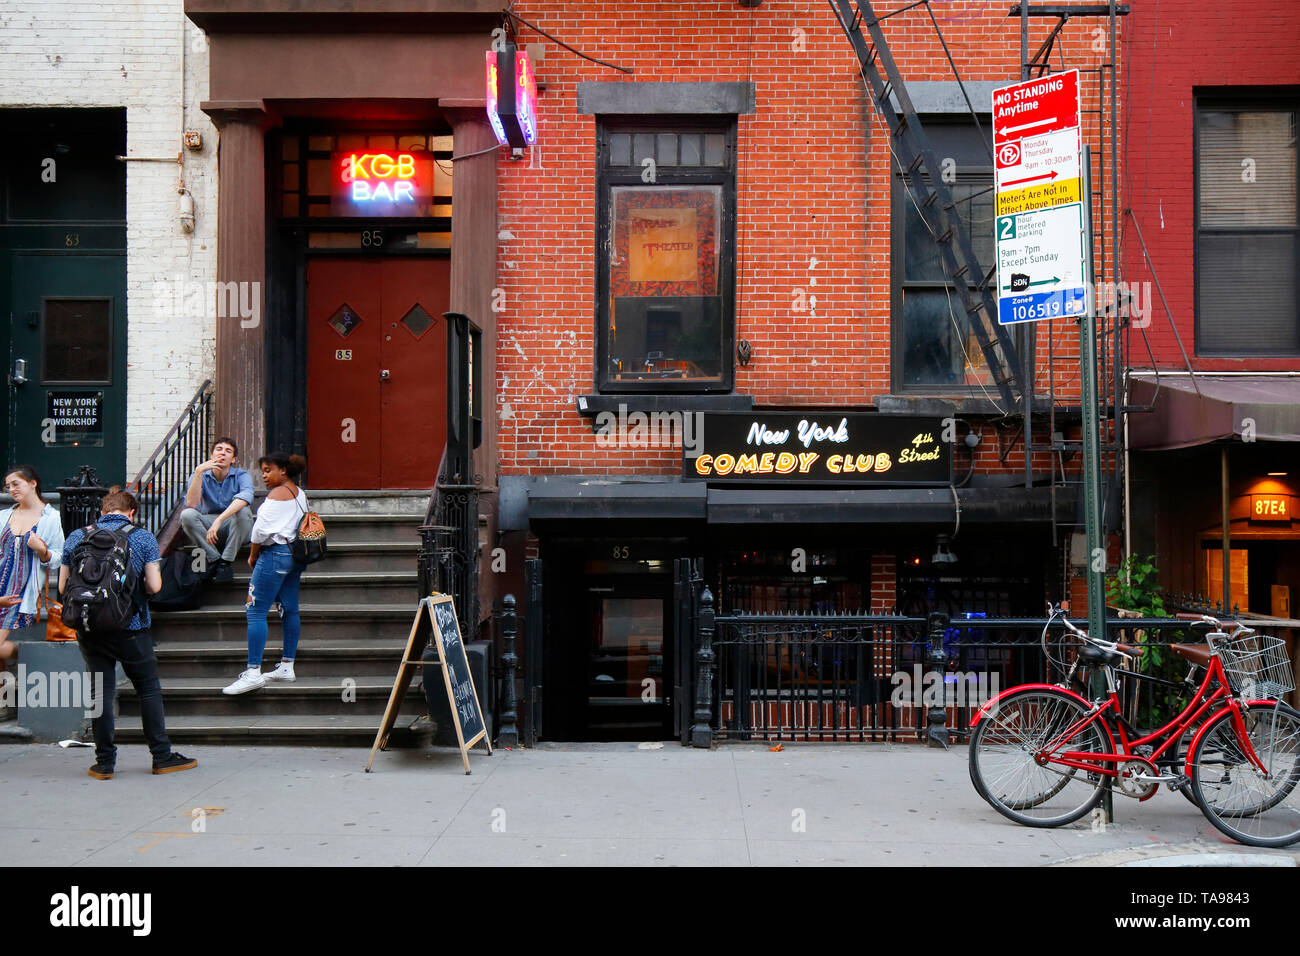 The Red Room, KGB Bar, New York Comedy Club, 85 E 4. St, New York, NYC Fassade einer Bar und Comedy Club in Manhattans East Village Stockfoto